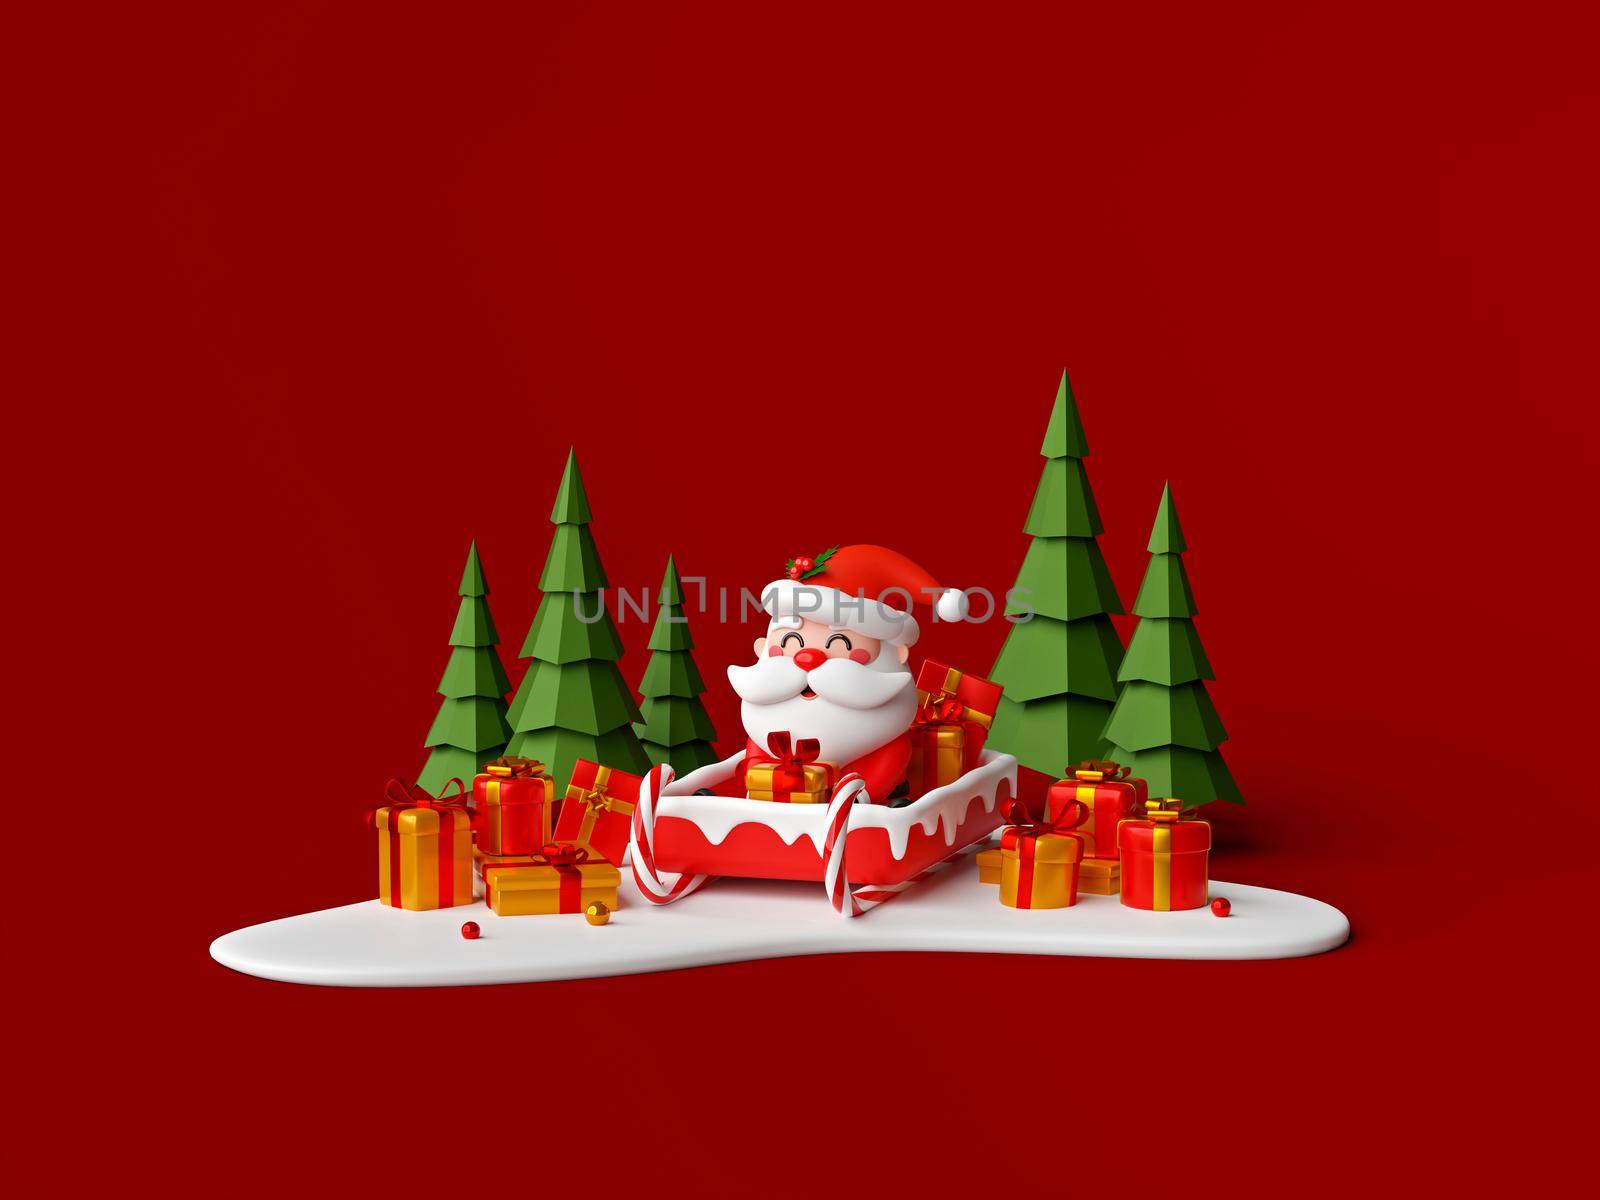 3d illustration of Santa Claus on sleigh with gift on snow ground by nutzchotwarut